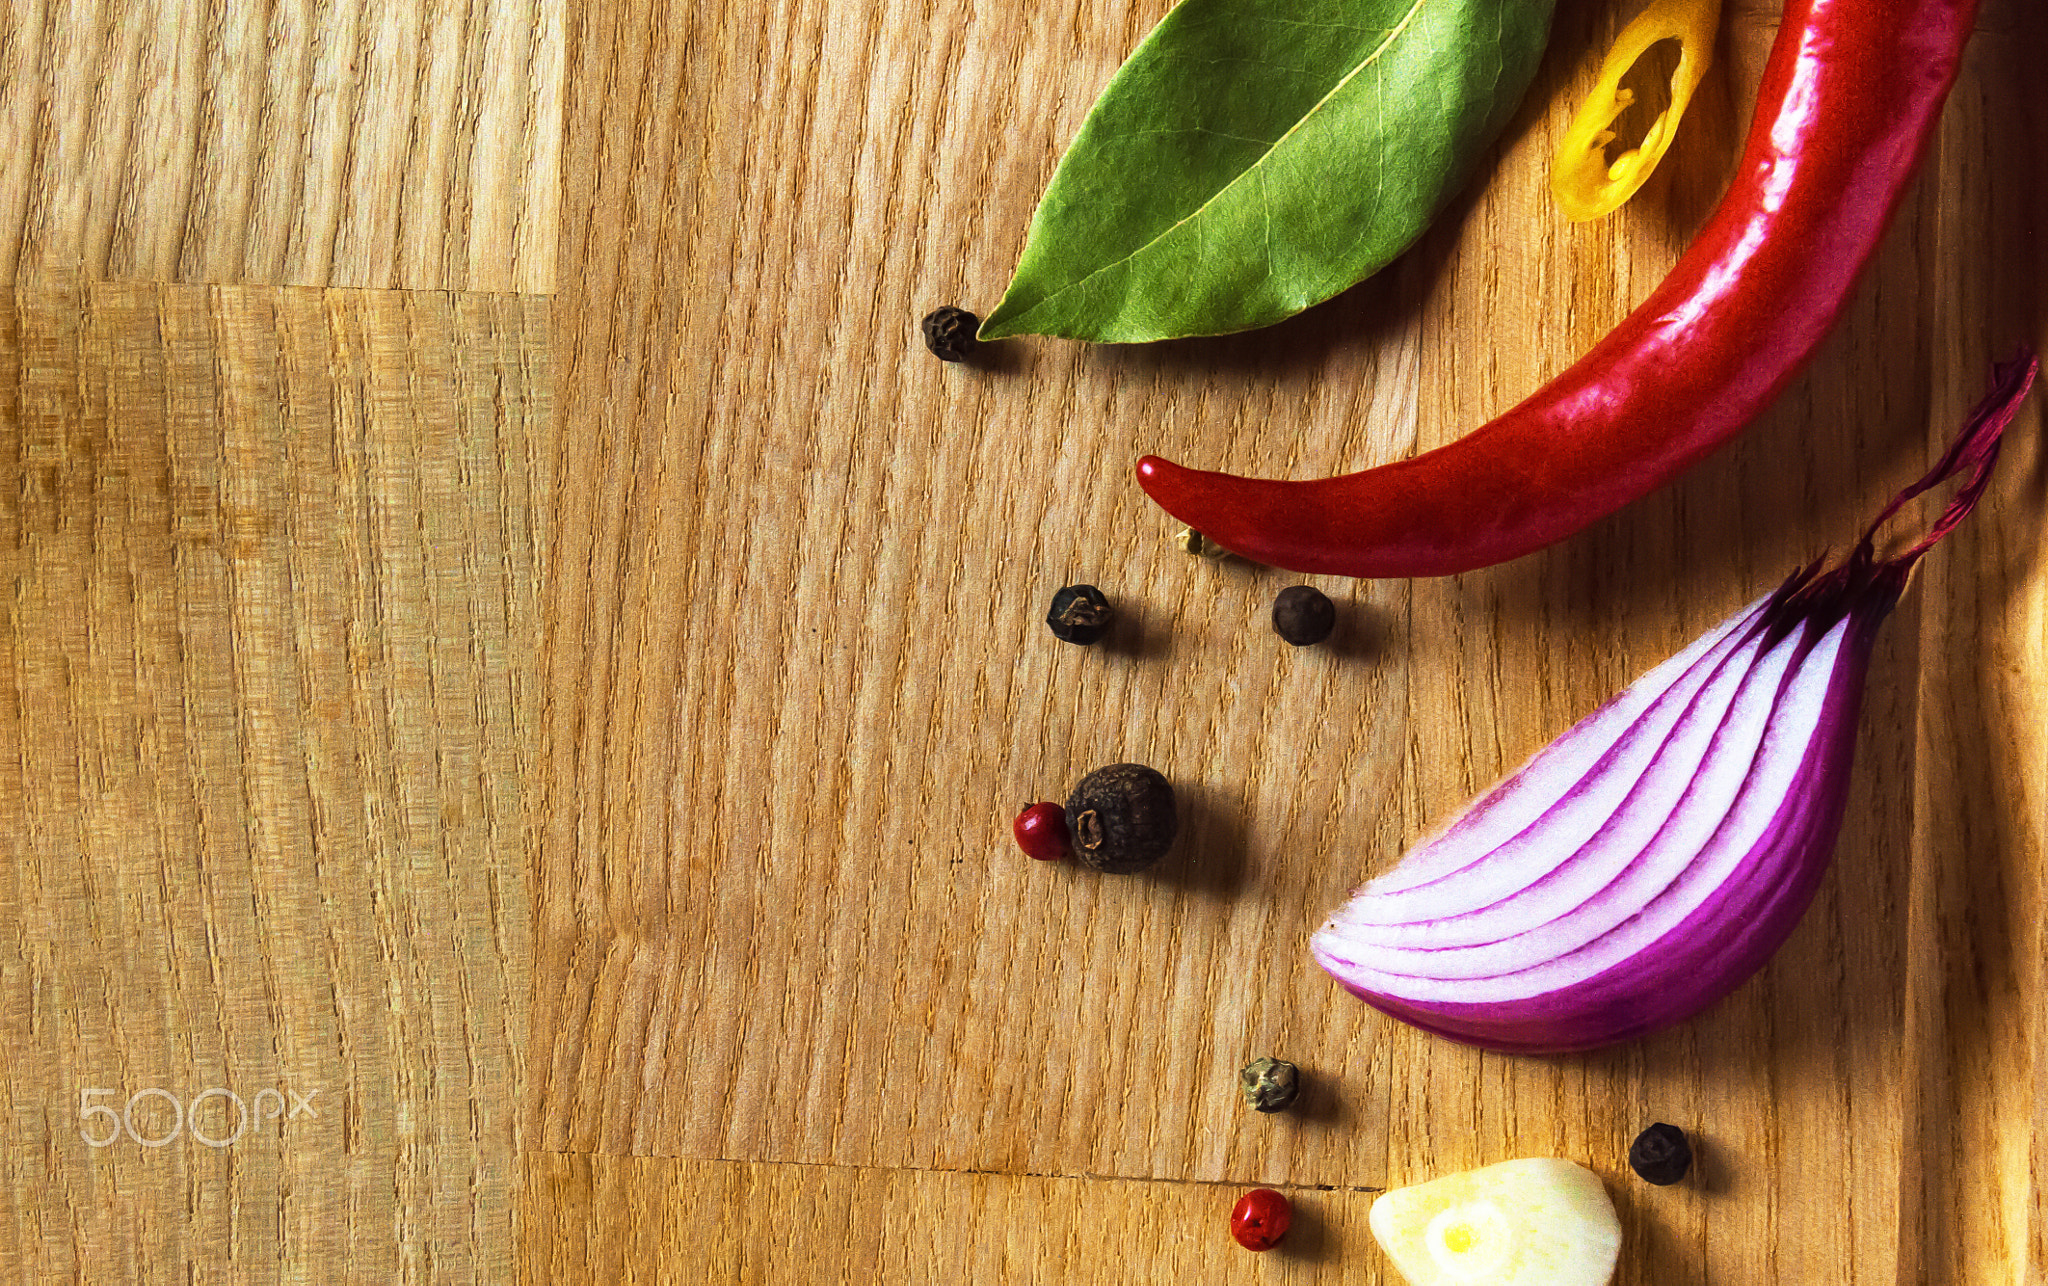 Chili peppers, bay leaf, yellow hot pepper slice, purple onion slice